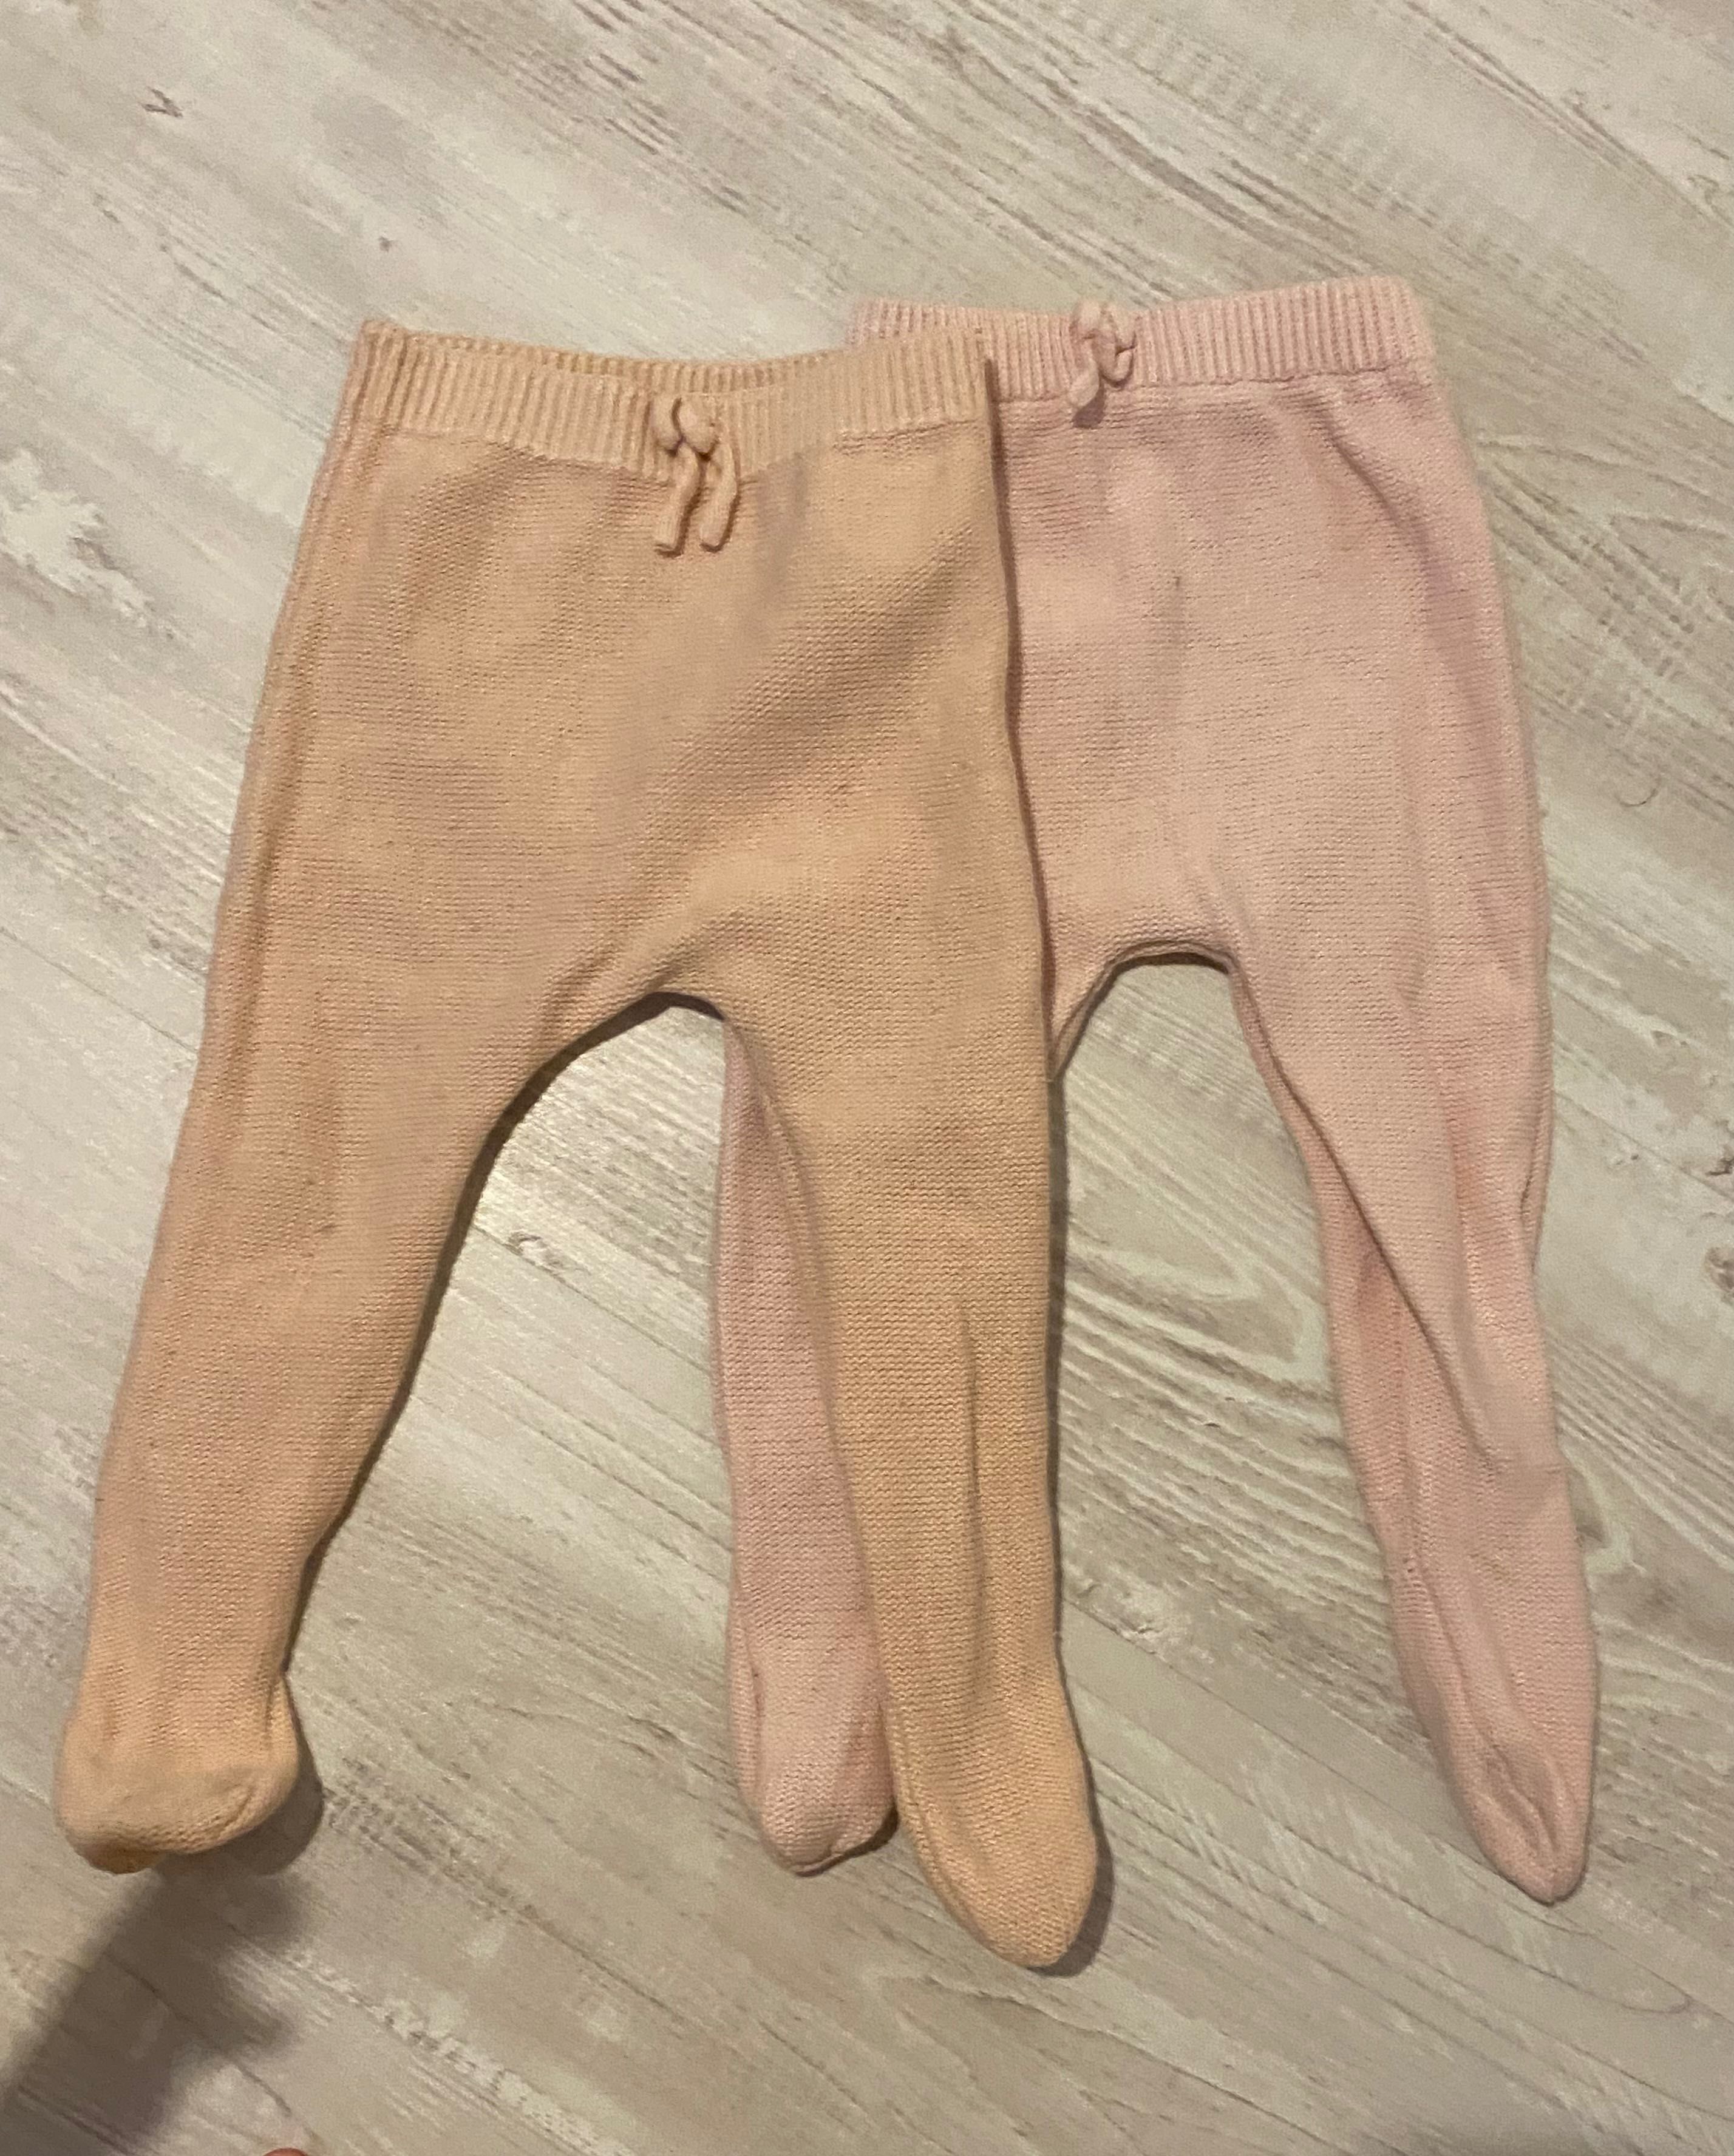 Haine/salopete/pantaloni/set.Zara/Next